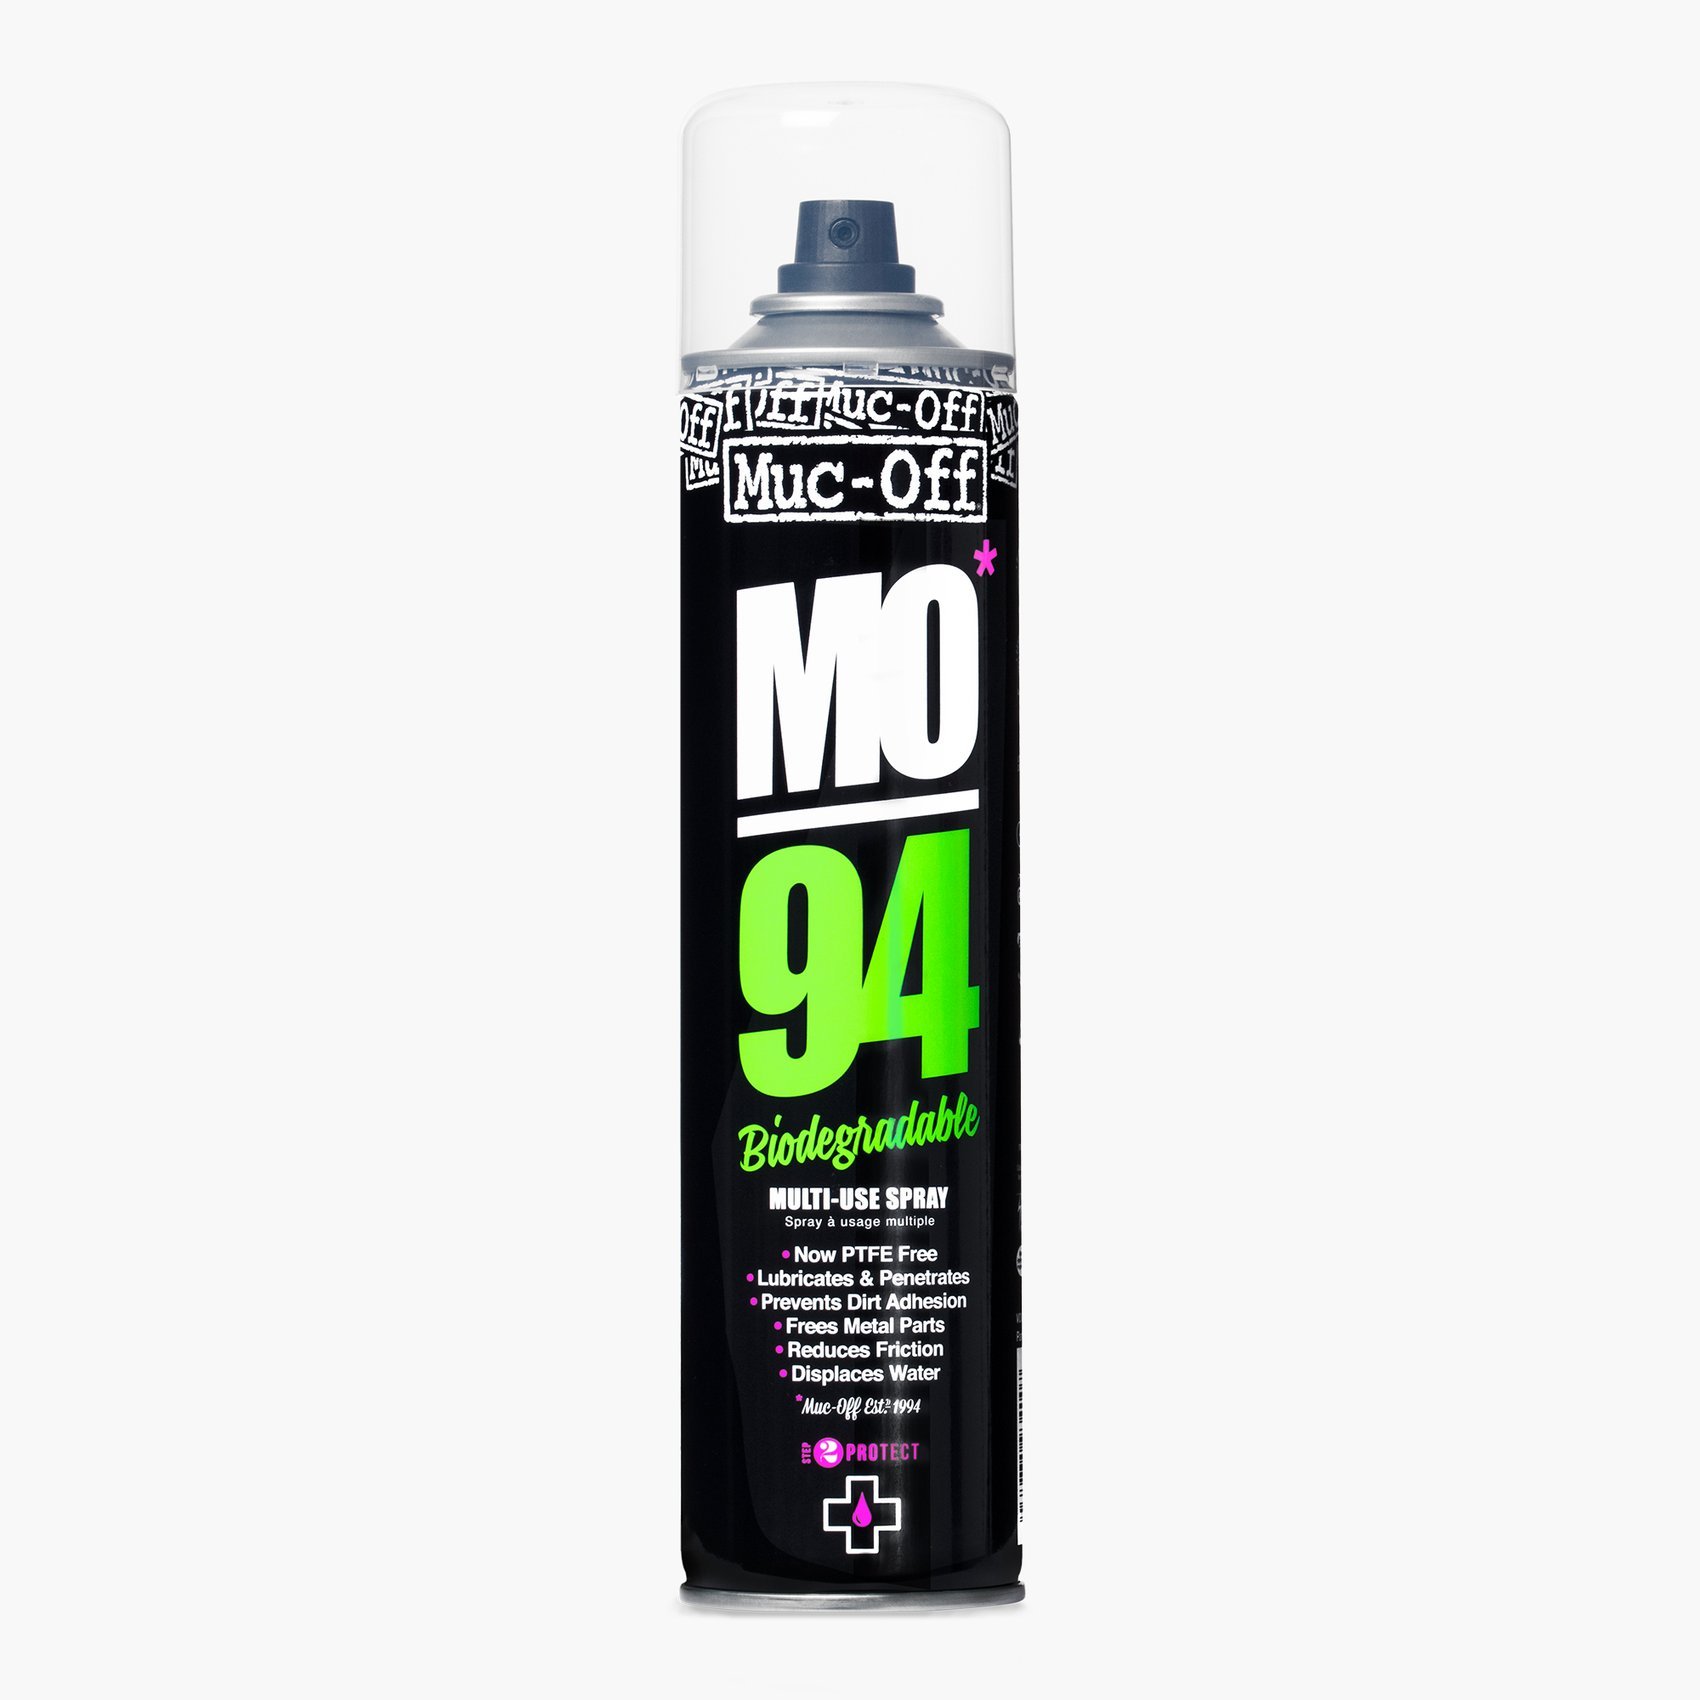 Spray Lubricante Mo-94 Biodegradable 400ml Muc Off  MKP